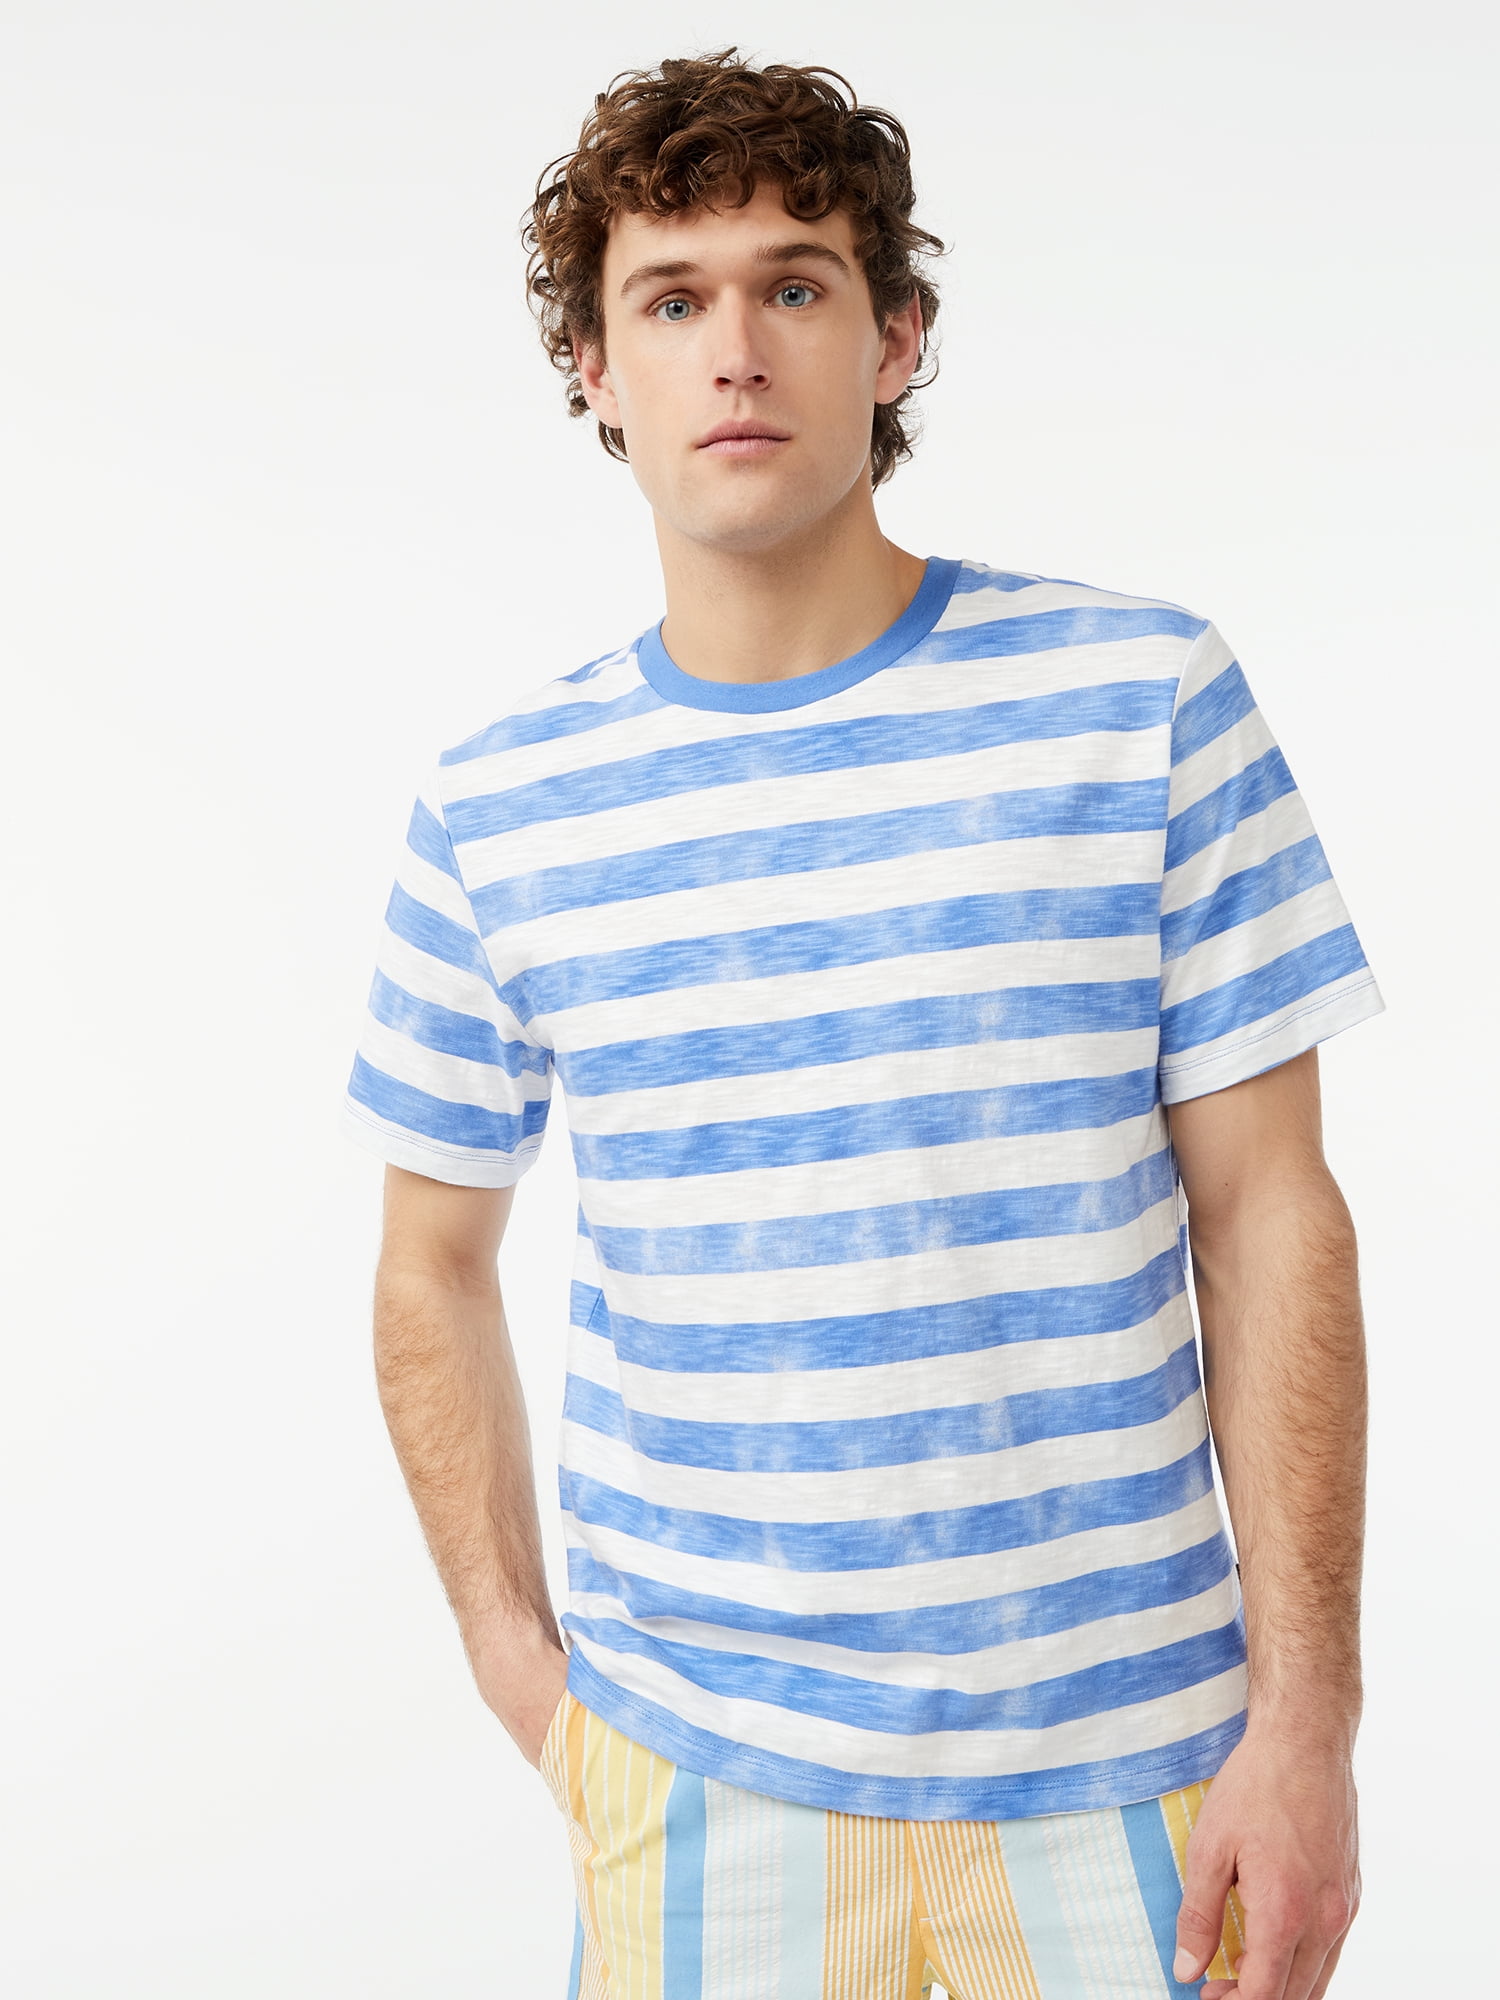 Free Assembly Men's Short Sleeve Stripe Printed T-Shirt - Walmart.com